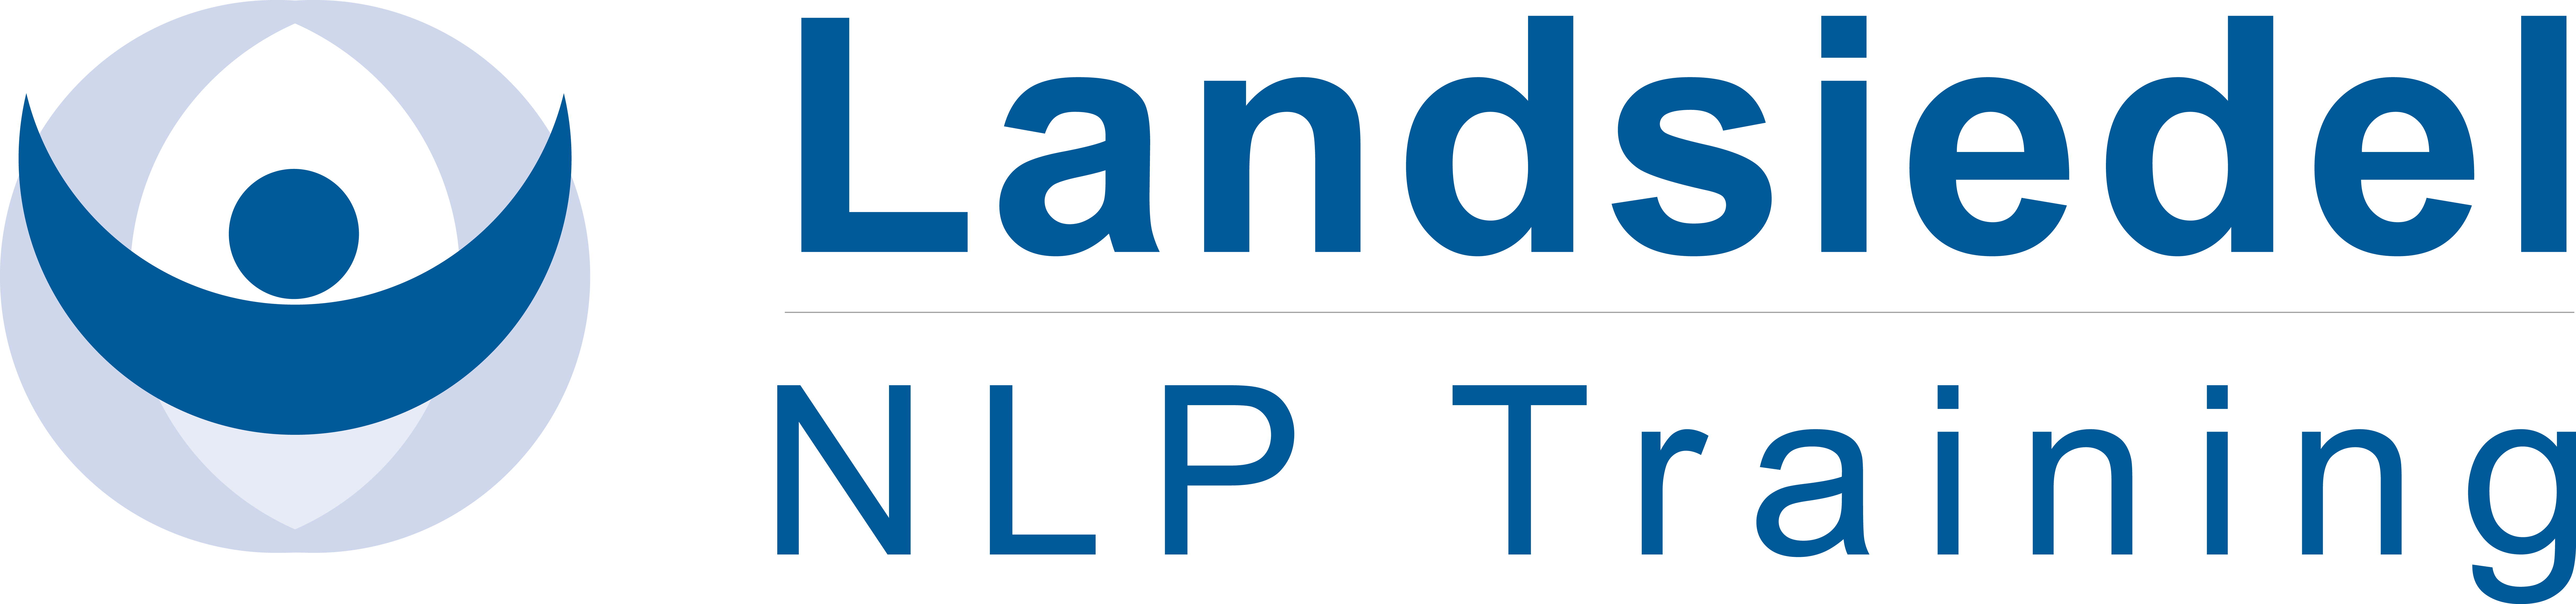 Landsiedel NLP Training